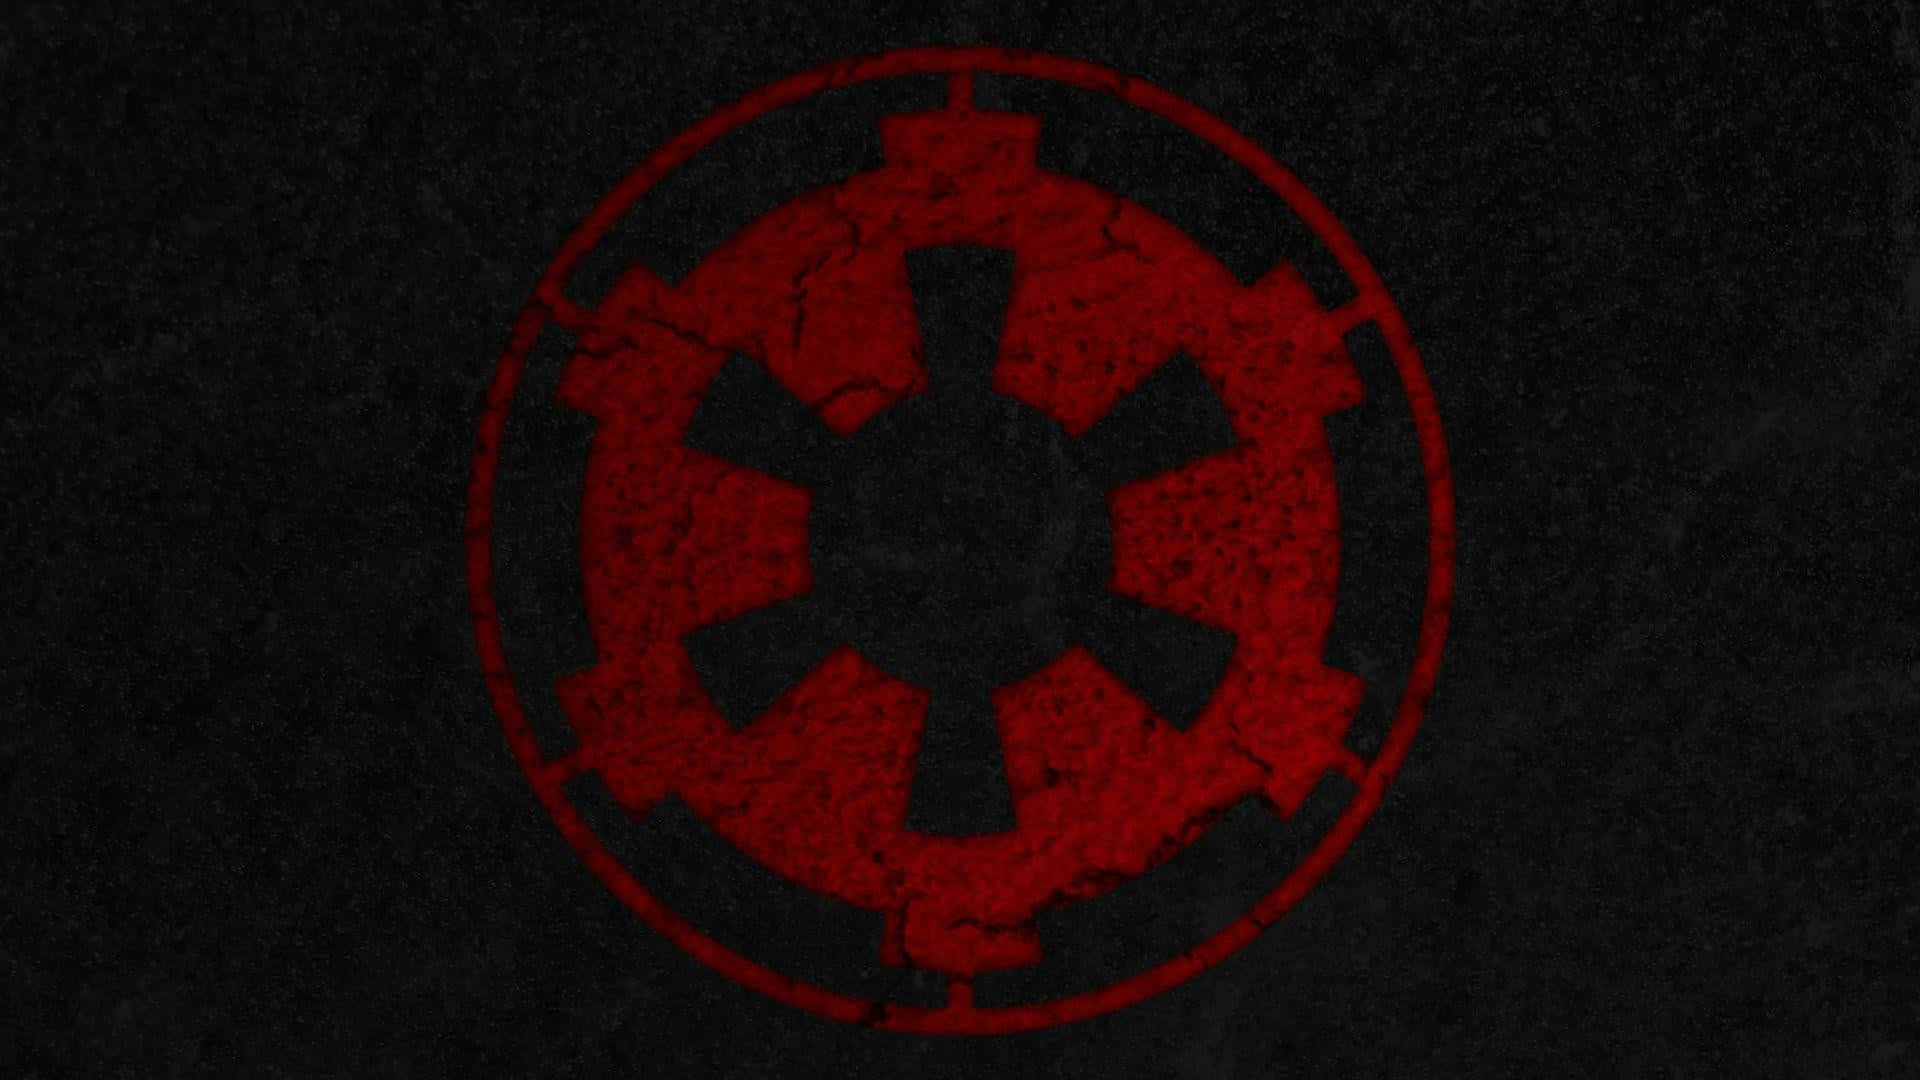 Imperiets logo fra Star Wars. Wallpaper